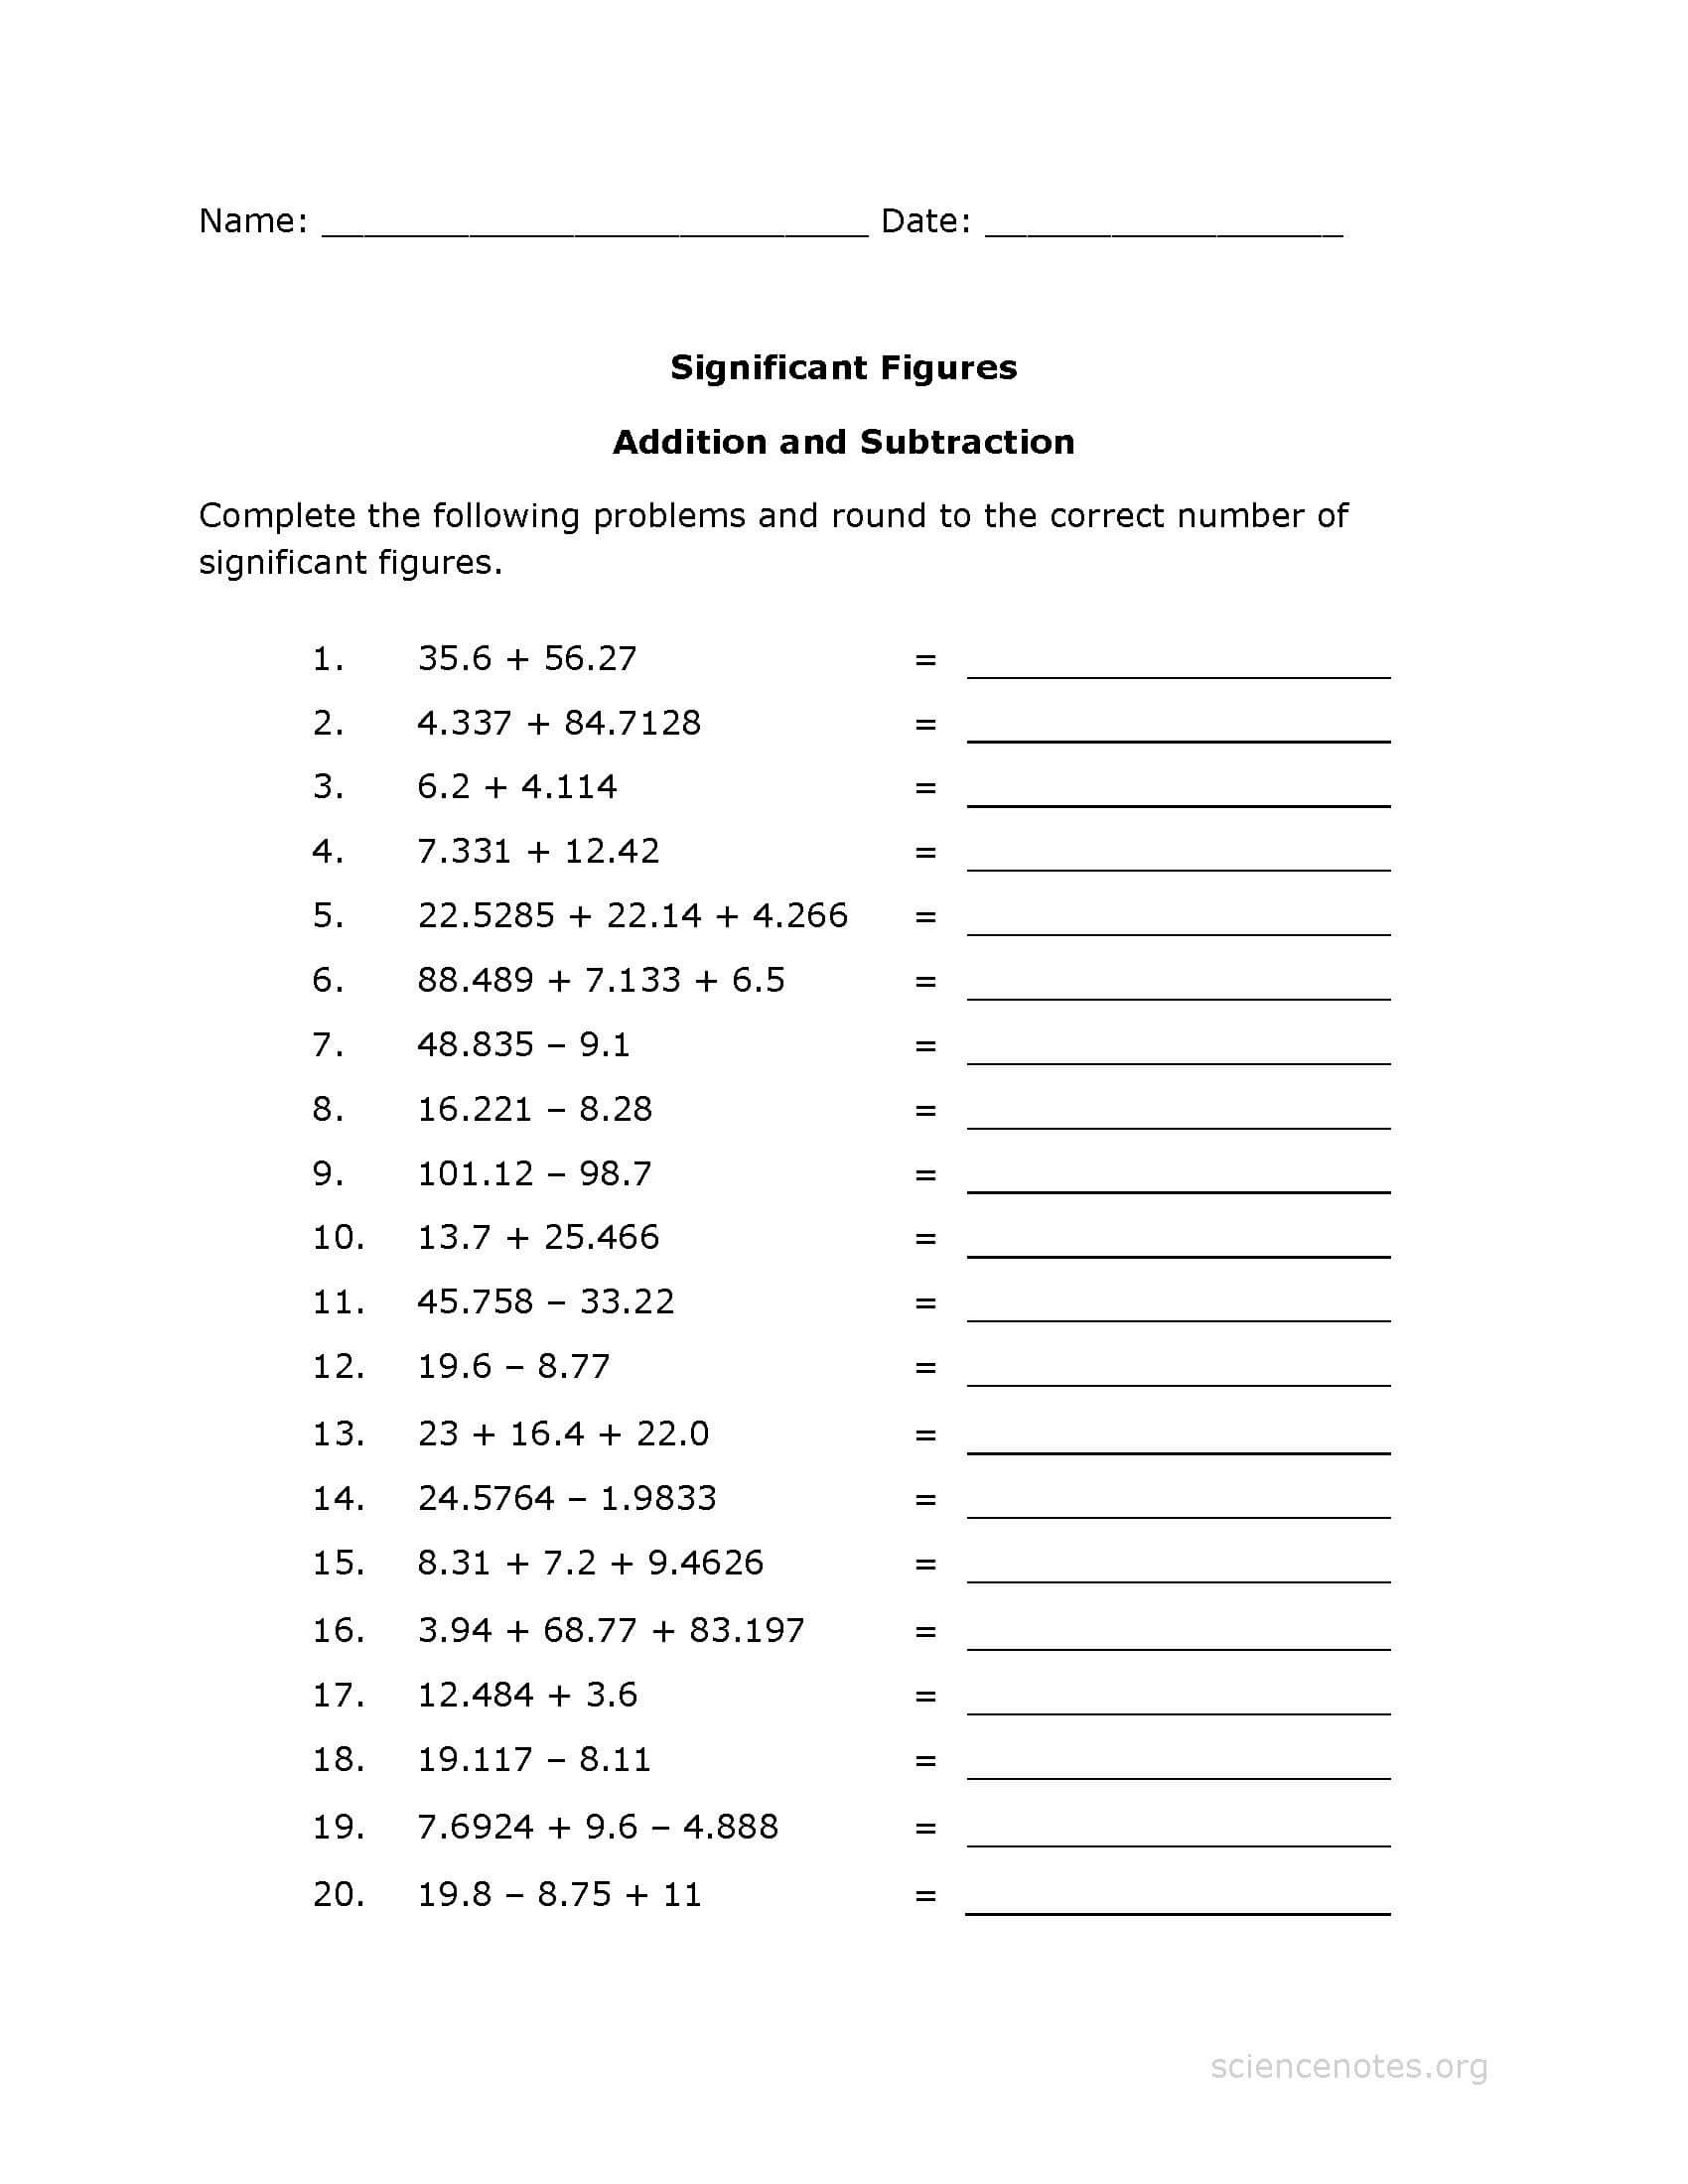 Significant Figures Practice Worksheet Significant Figures Worksheet Pdf Addition Practice